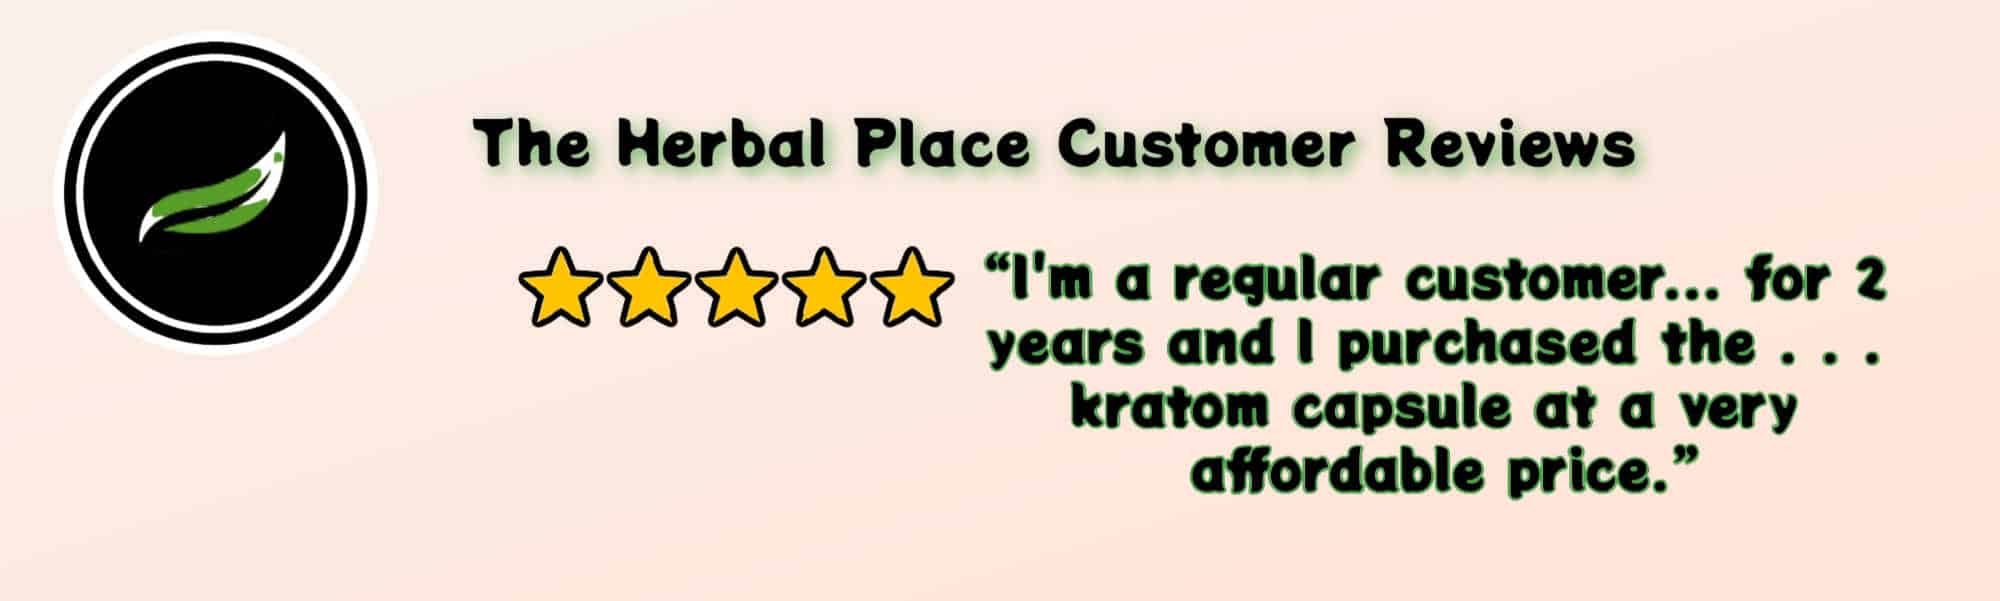 image of herbal place kratom customer reviews